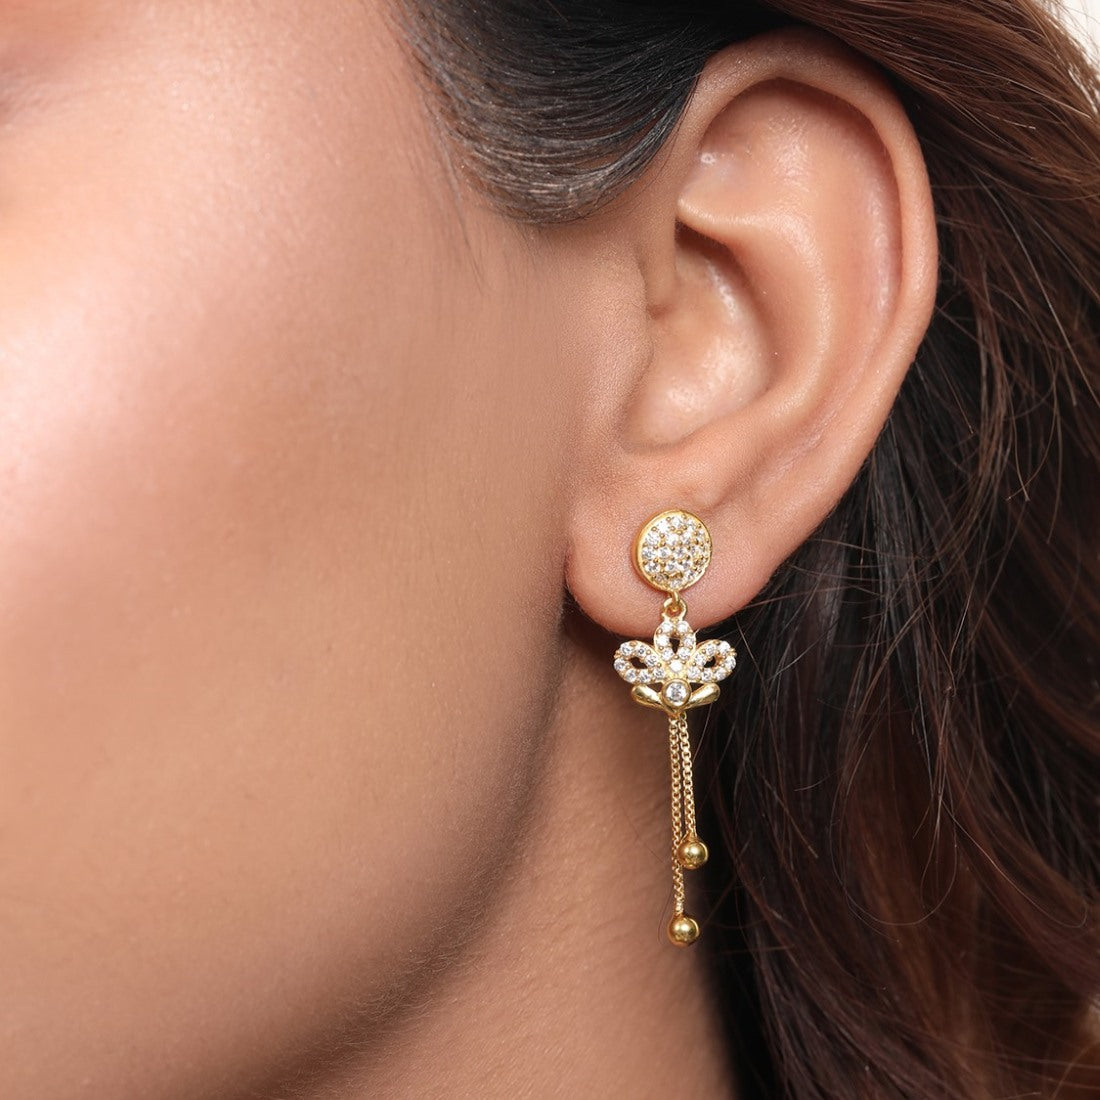 Golden Bloom 925 Sterling Silver Gold-Plated Flower Earrings